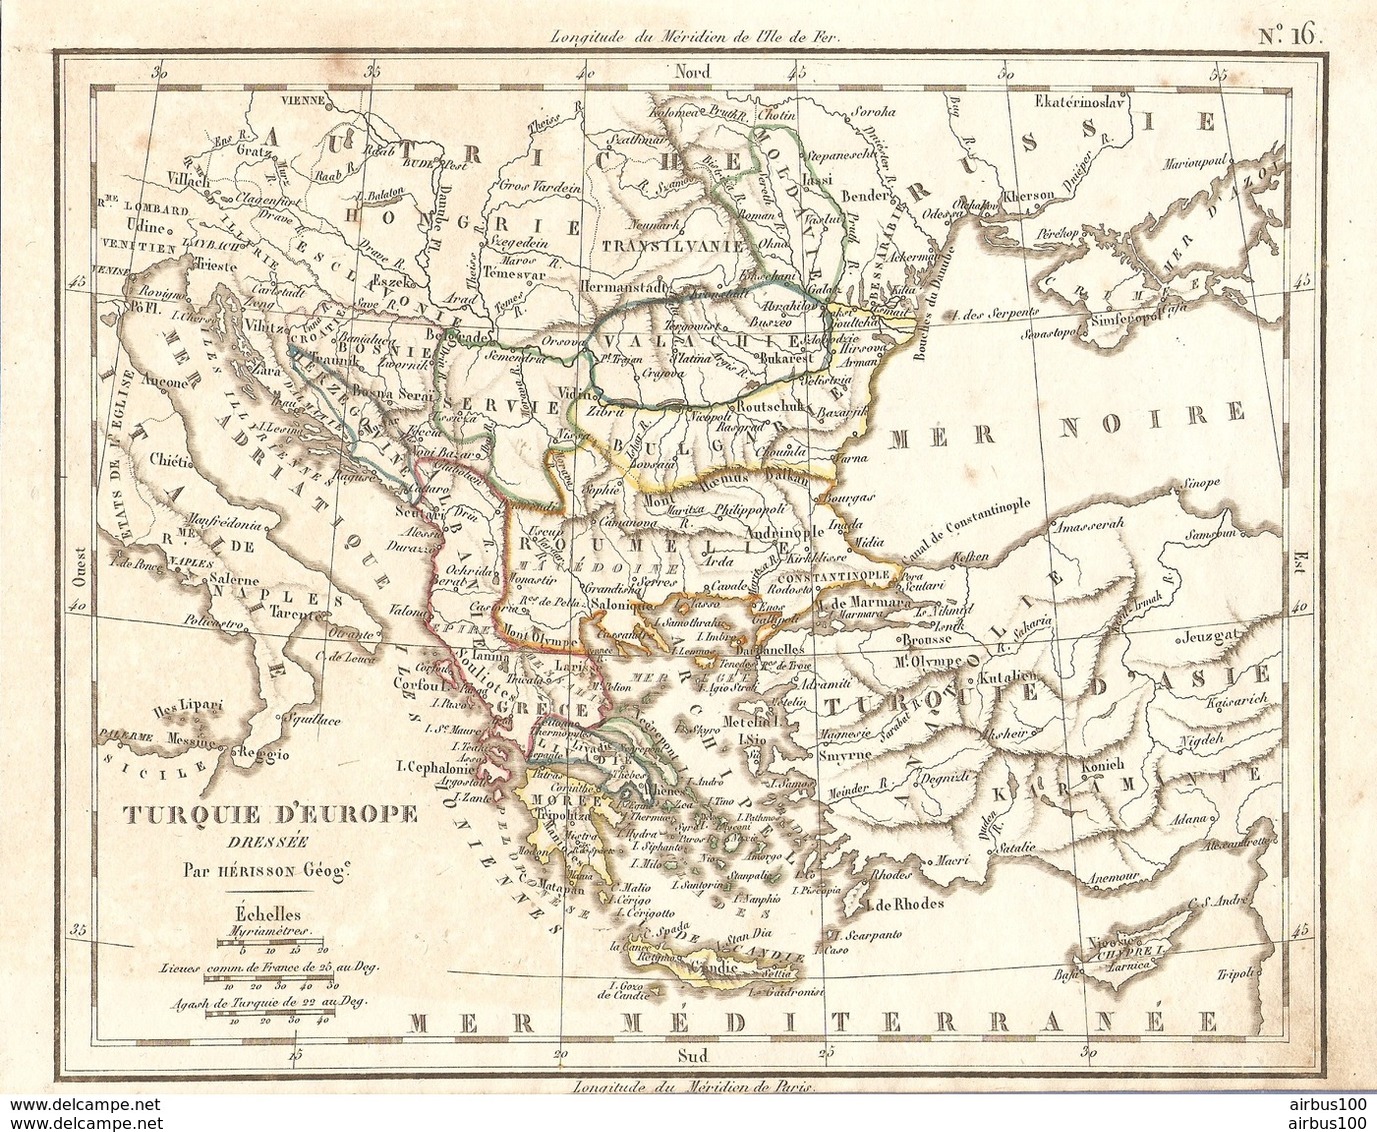 CARTE ANNÉE 1828 TURQUIE D'EUROPE - MAP YEAR 1828 TURKEY OF EUROPE - EUROPA TÜRKEI - EUROPA TURQUÍA - TURCHIA EUROPEA - Cartes Géographiques